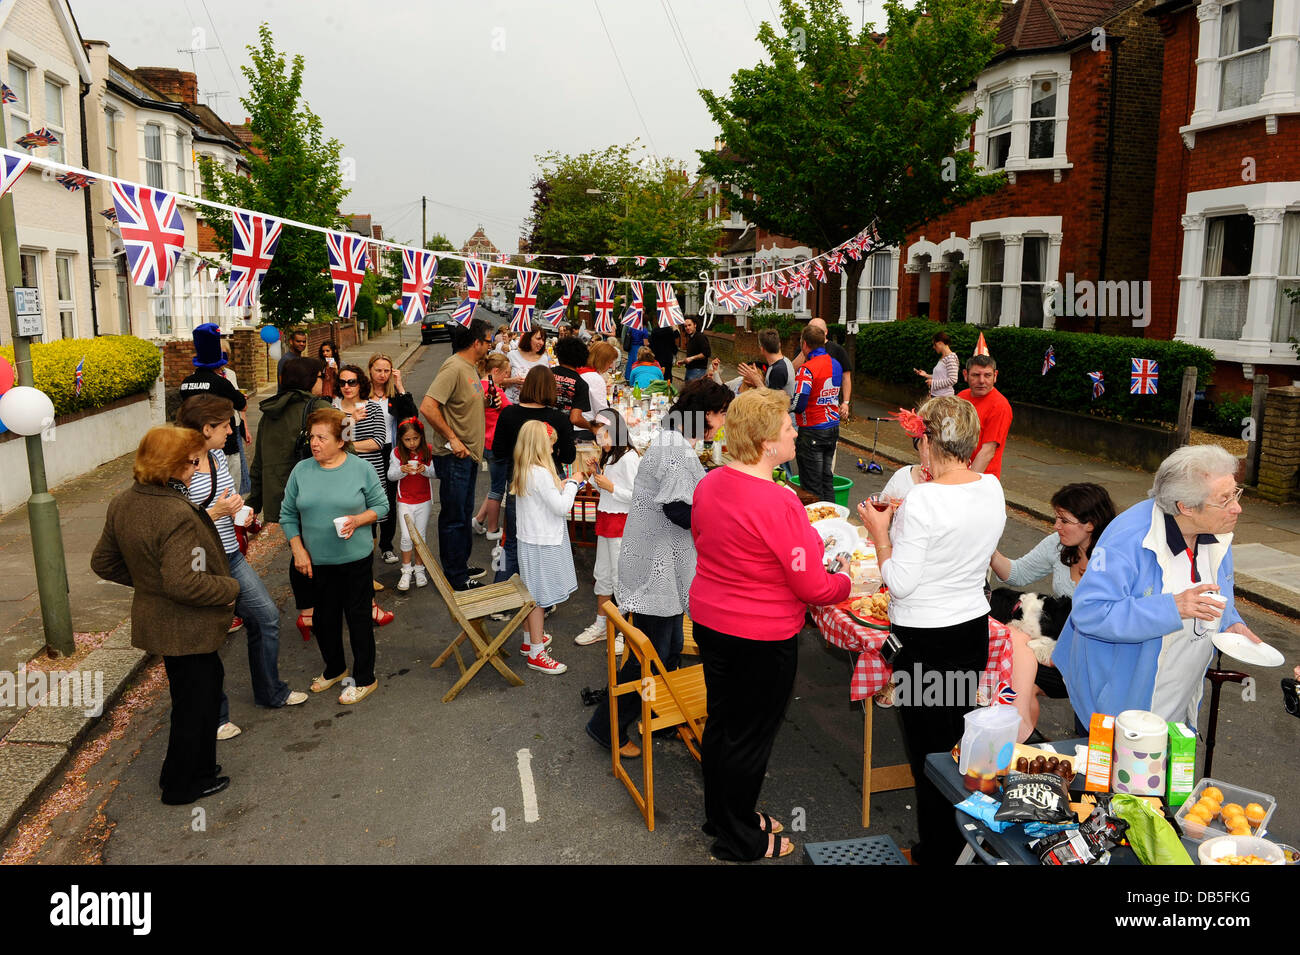 Boda Real fiesta callejera celebrada en Leicester Road, East Finchley, en el norte de Londres. Inglaterra. Londres, Inglaterra - 29.04.11 Foto de stock